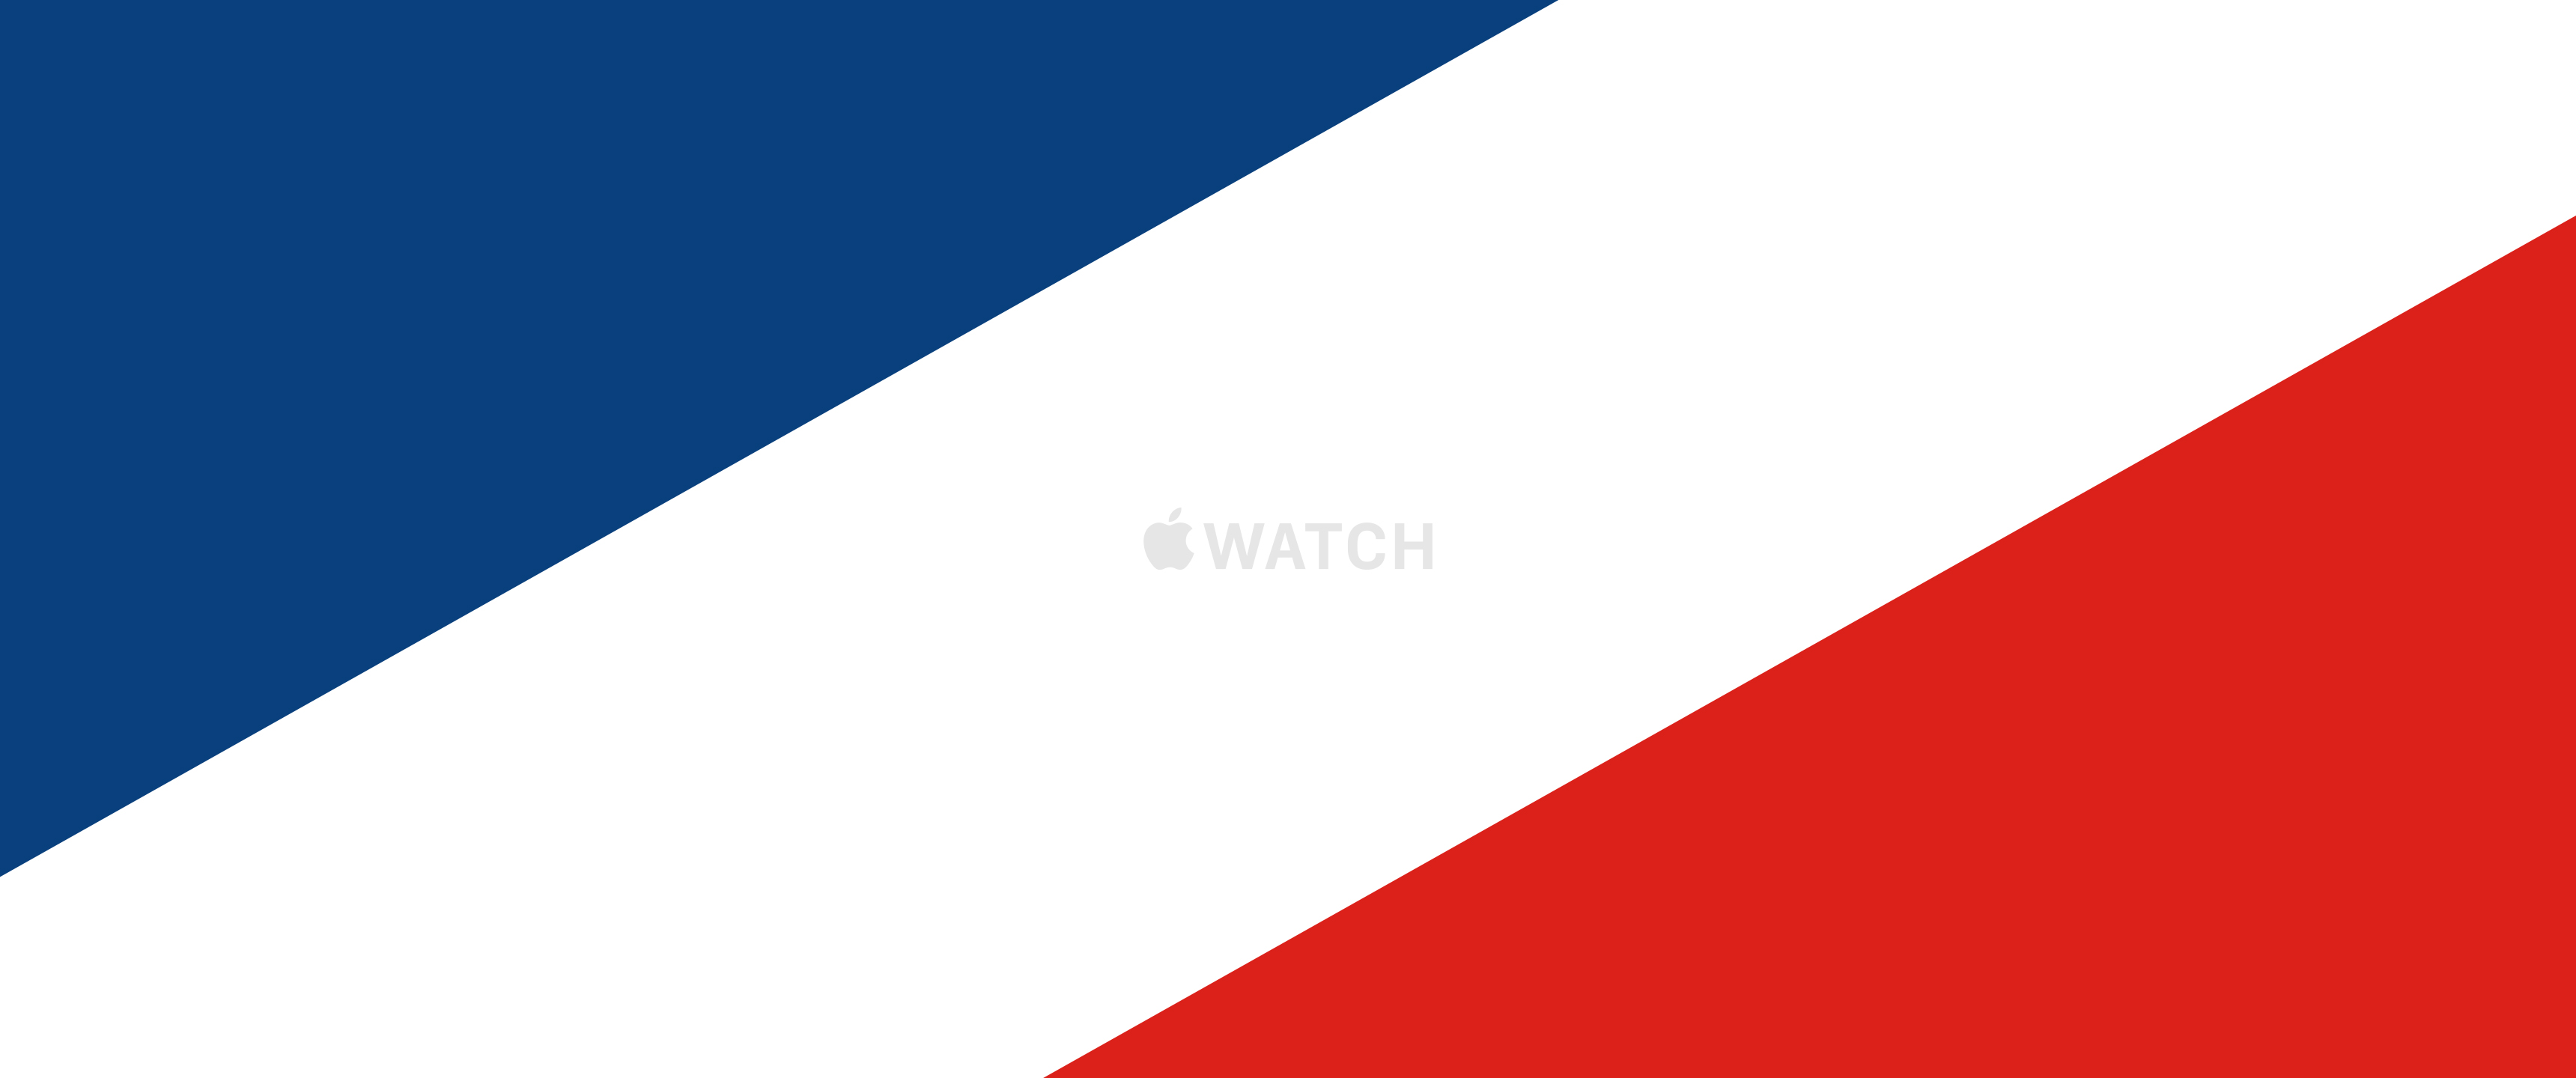 Apple Inc Computer Watch France France Flag 3440x1440